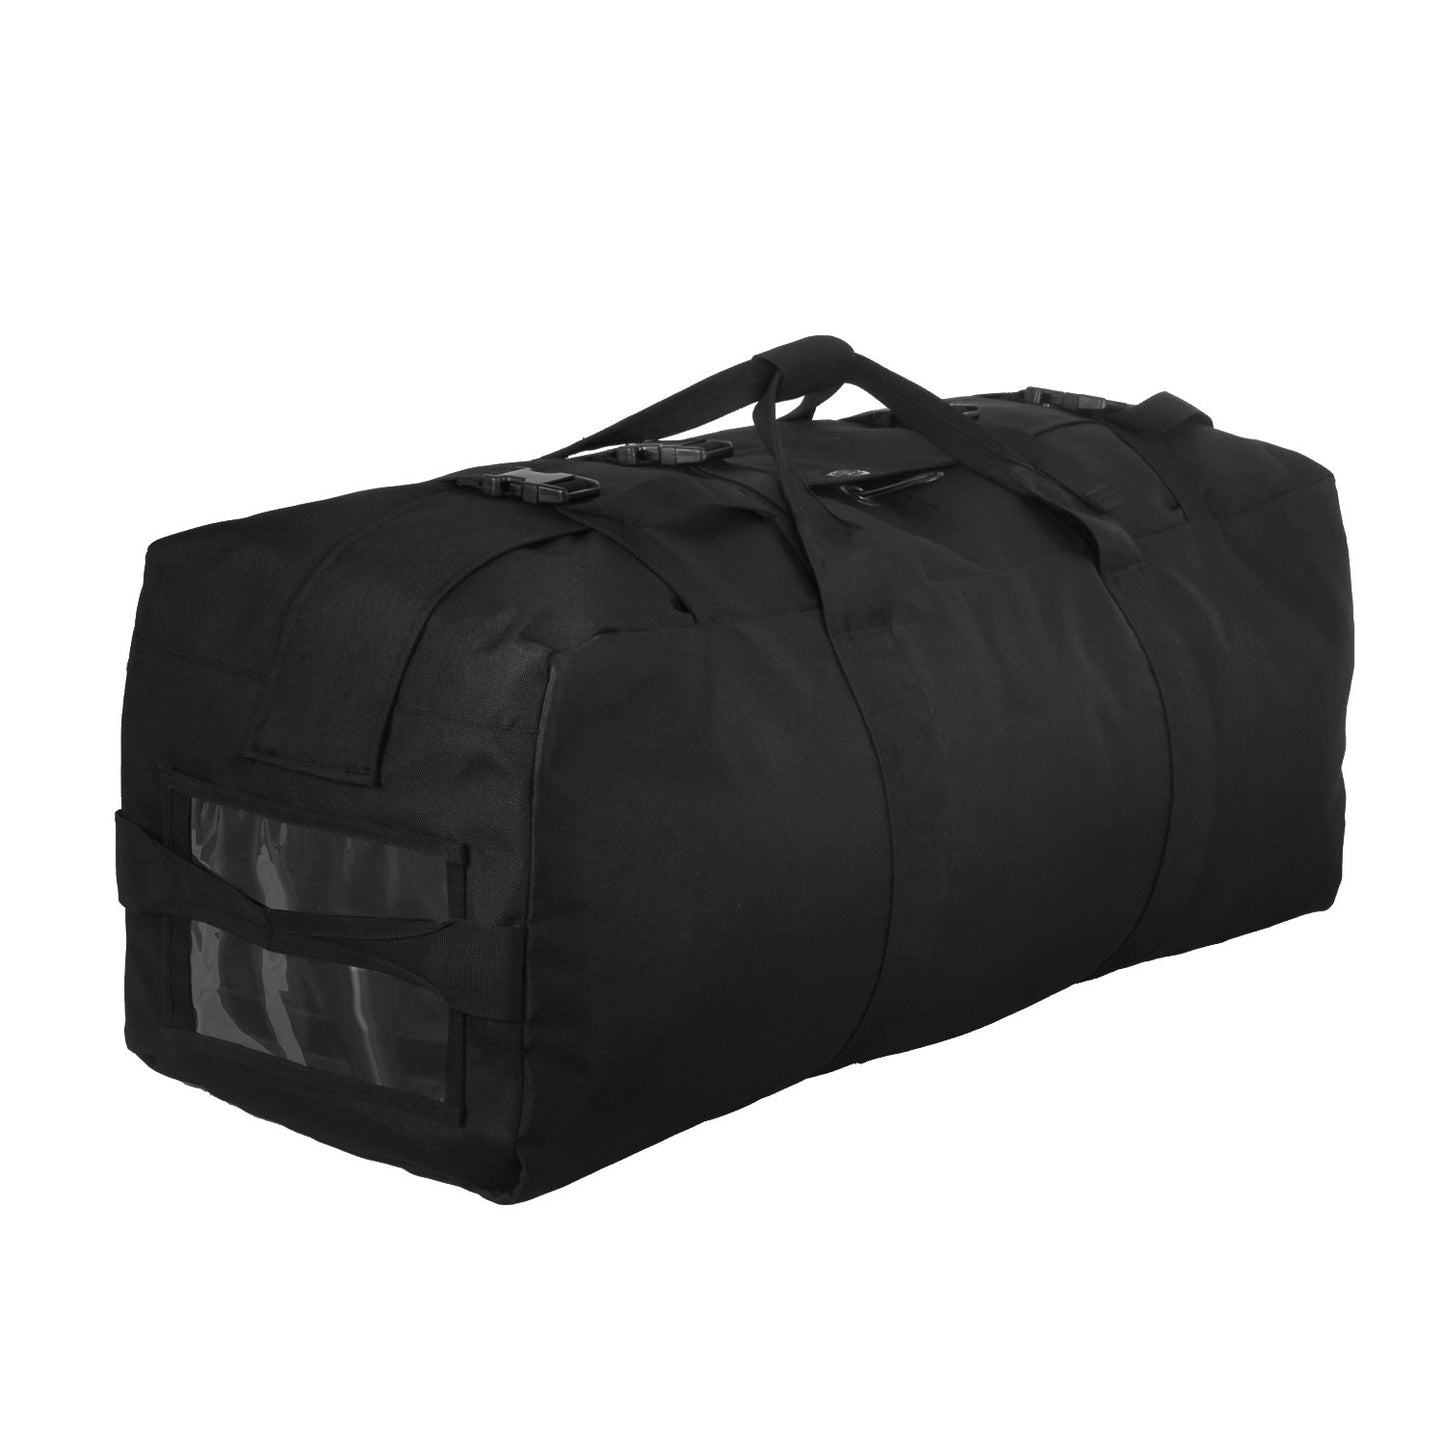 Milspec GI Type Enhanced Duffle Bag Nylon Duffle Bags MilTac Tactical Military Outdoor Gear Australia